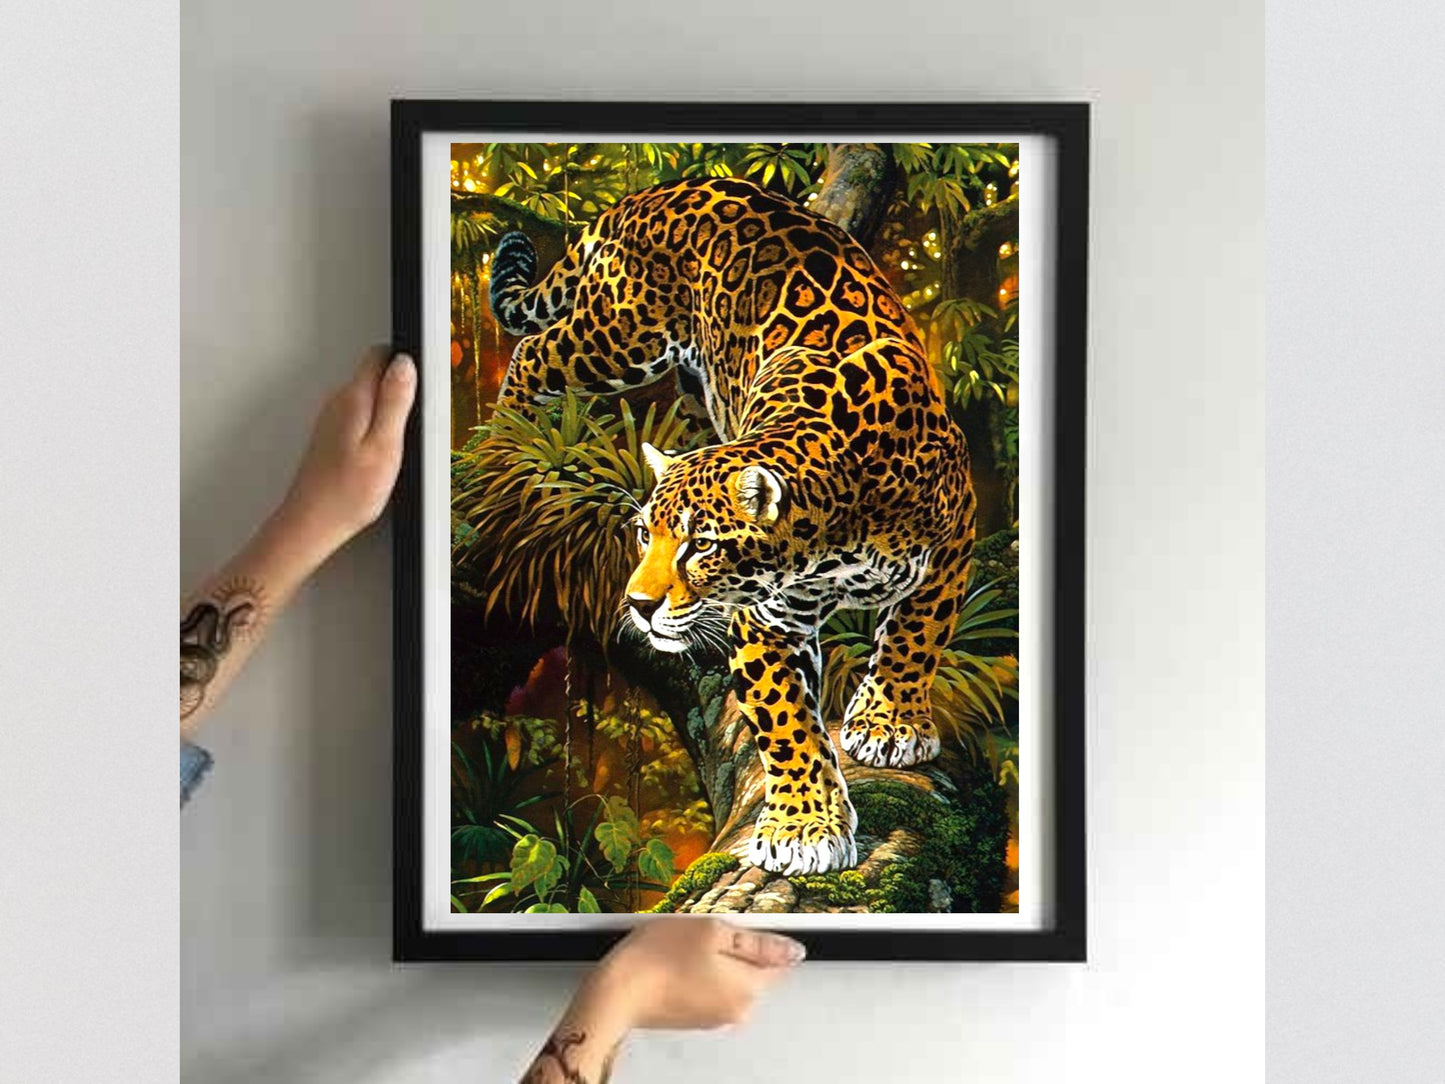 DIY Bead embroidery kit "Predator Tigers". Size: 11.8-18.5" (30-47cm) - VadymShop